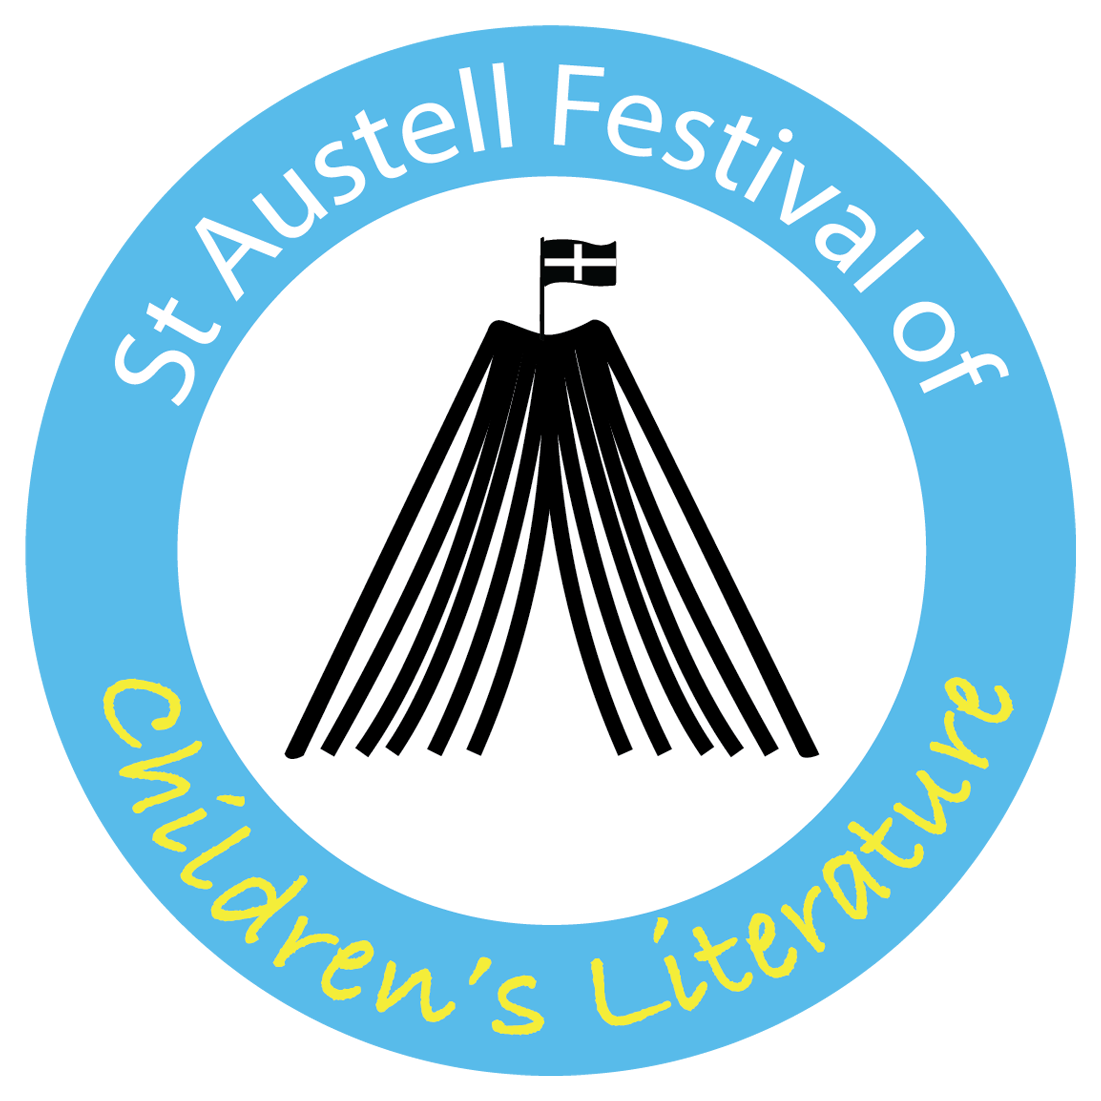 St Austell Festival of Children's Literature